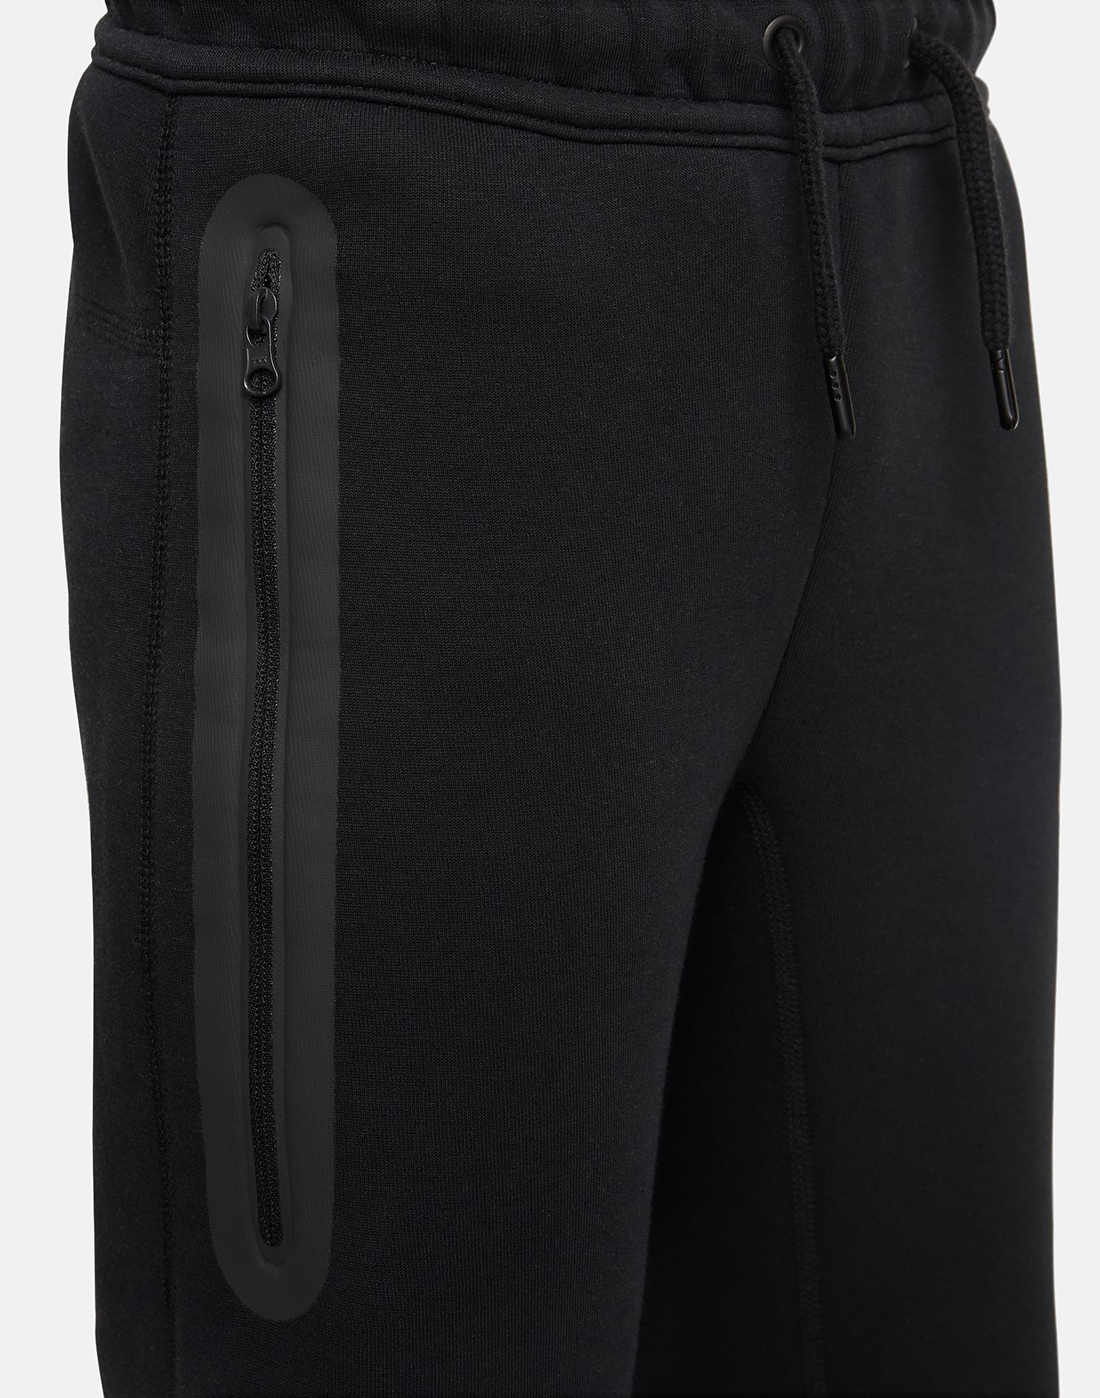 Nike Older Boys Tech Fleece Pant - Black | Life Style Sports UK